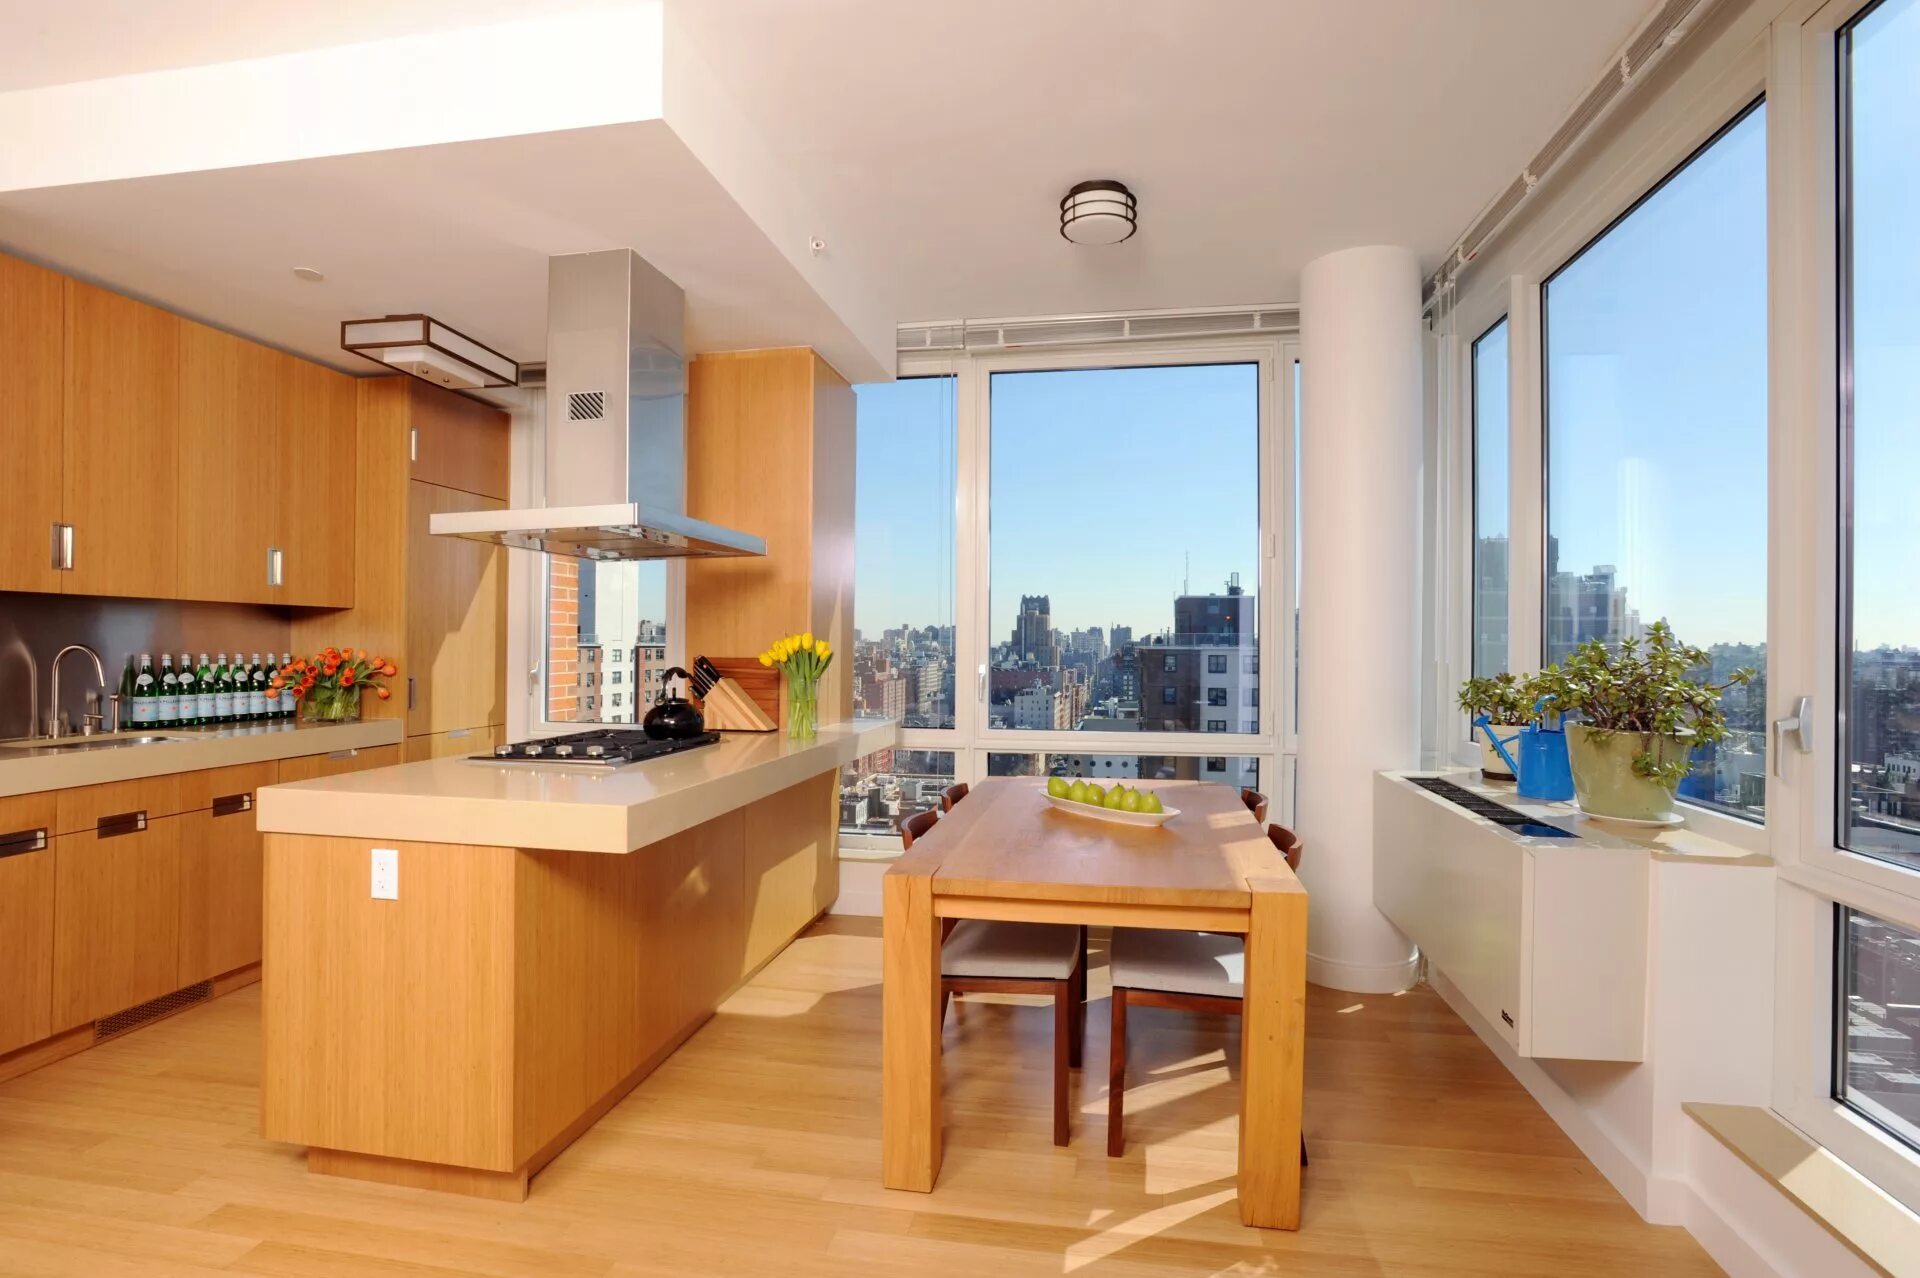 Три комнаты кухни. Кухня с панорамными окнами. Кухонная комната. Интерьер кухни. Комната кухня.